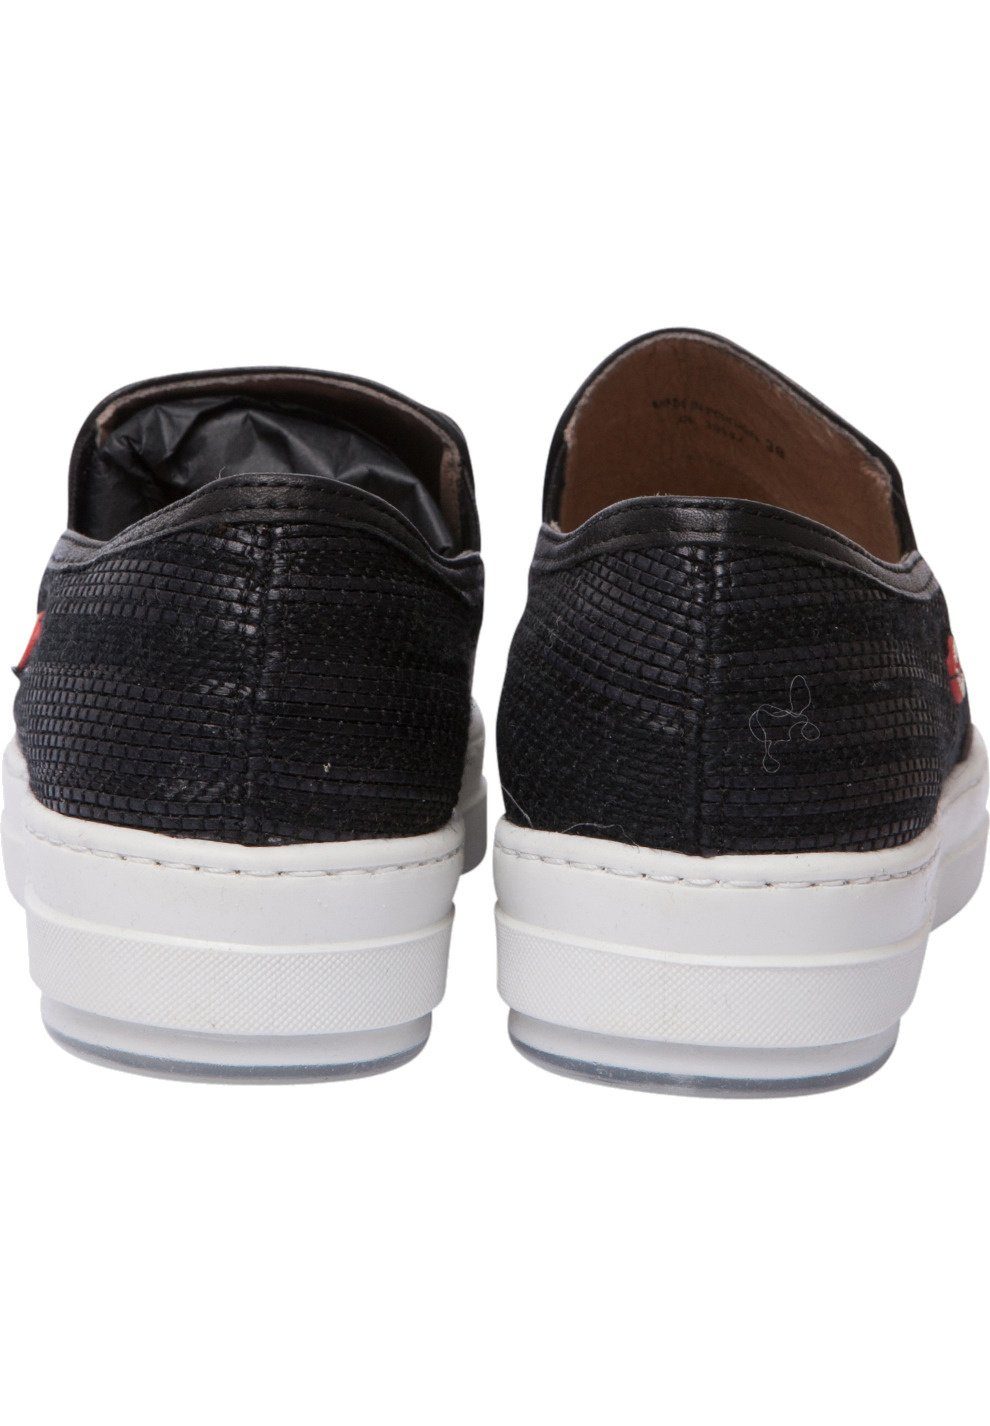 Schuhe Halbschuhe NOBRAND® No Brand Slipper Clover black art Slipper